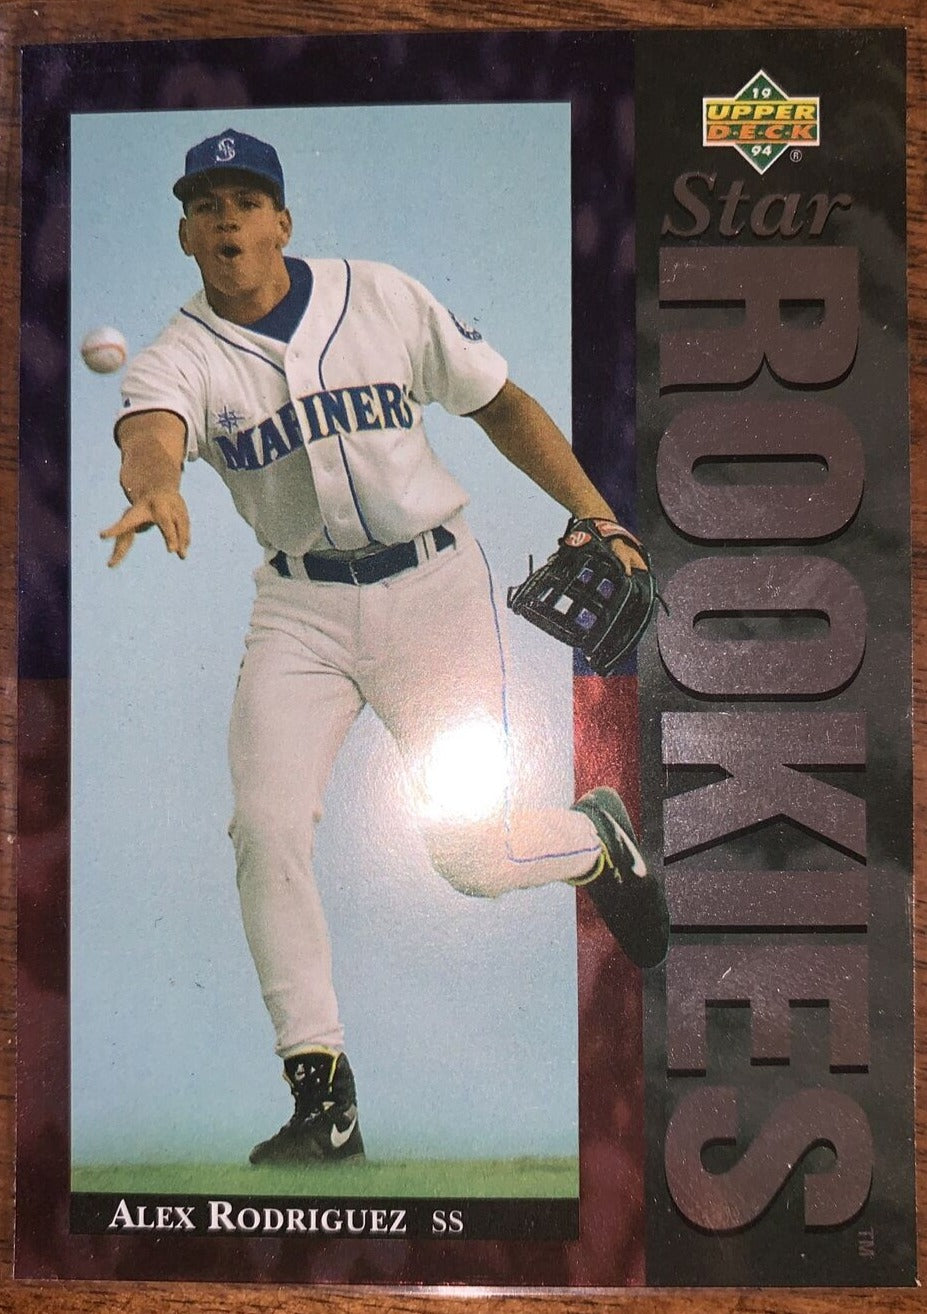 Michael Jordan 1994 Upper Deck Star Rookies Baseball Card White